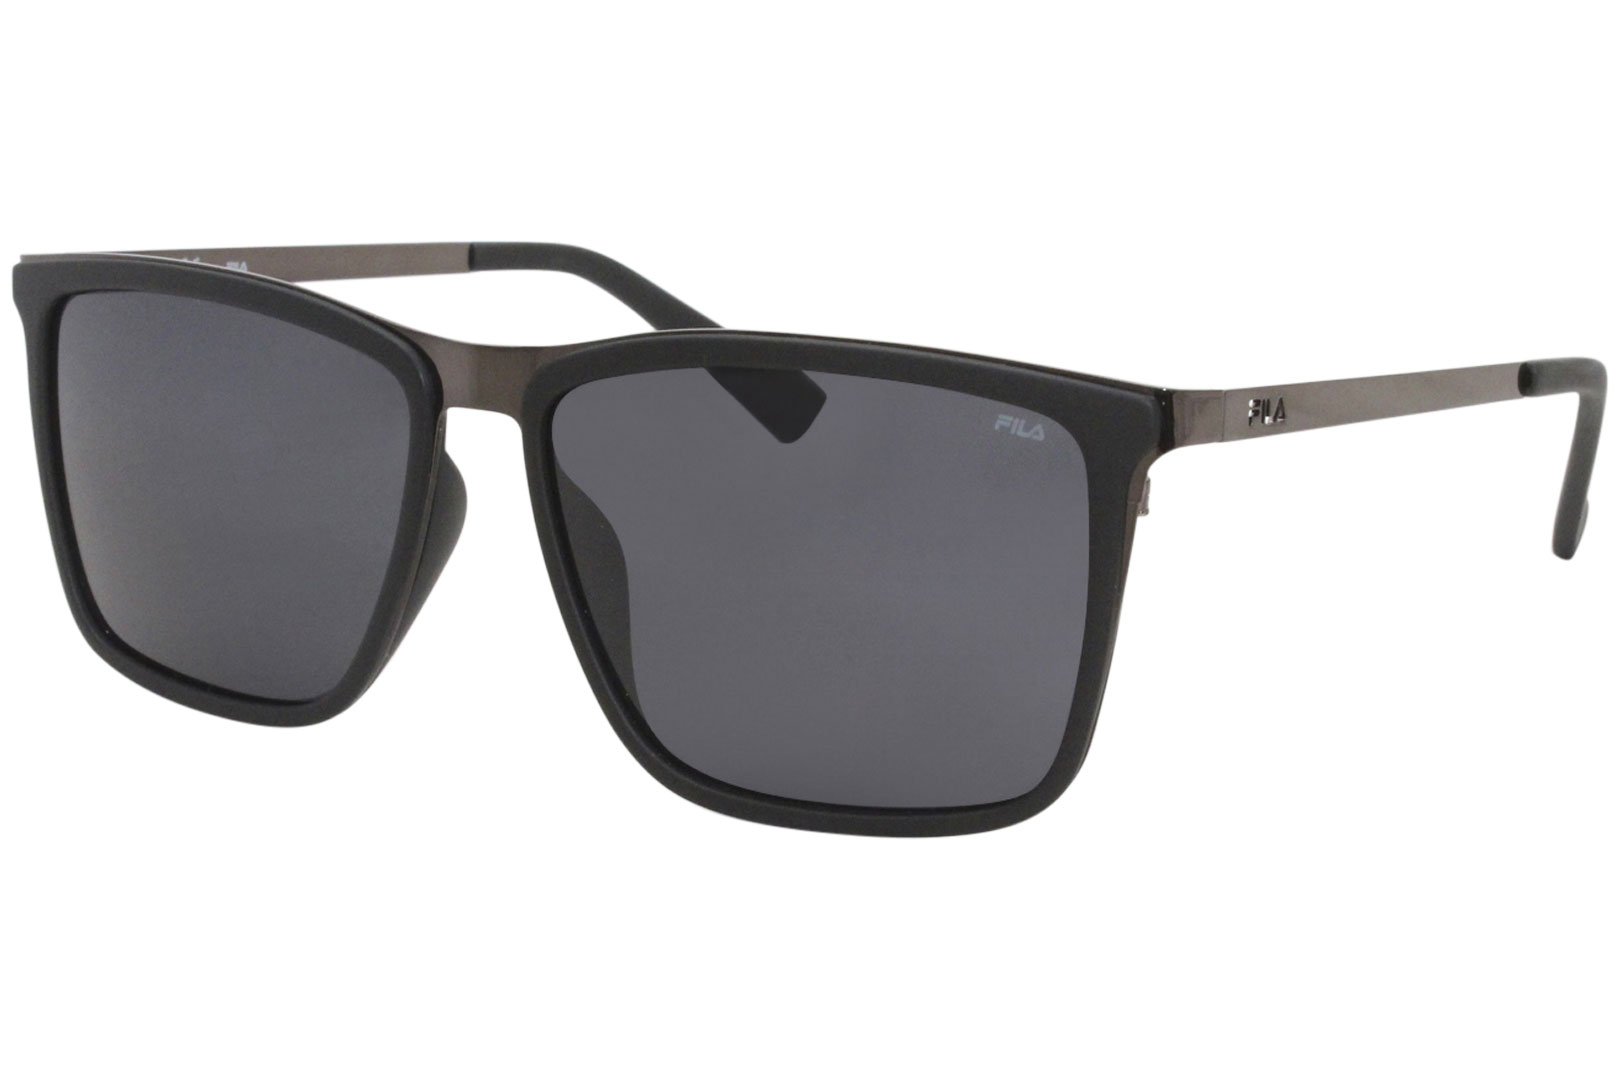 Fila Sunglasses SF8495 Polarized 57-14-145mm | EyeSpecs.com